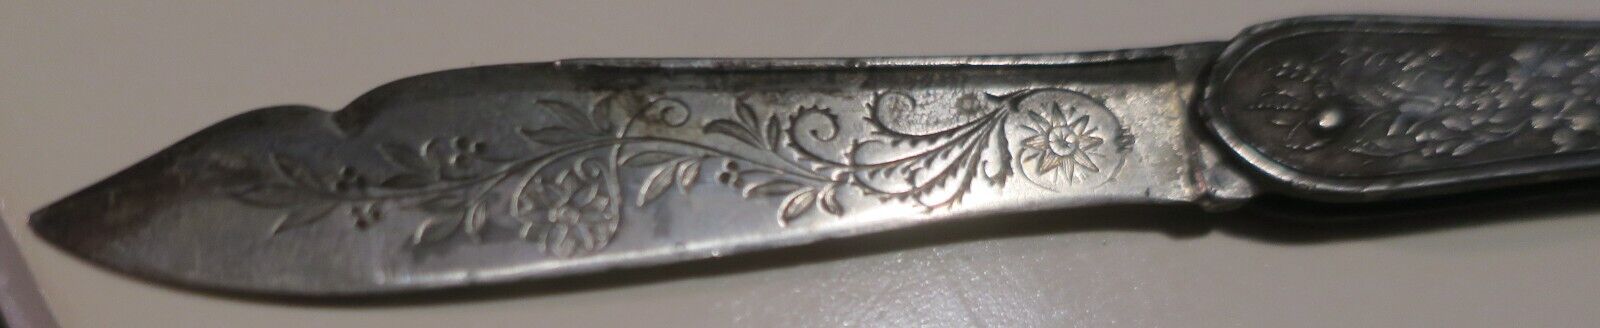 ANTIQUE Silver  FOLDING FRUIT KNIFE, Cartouche & embossed design, engraved blade